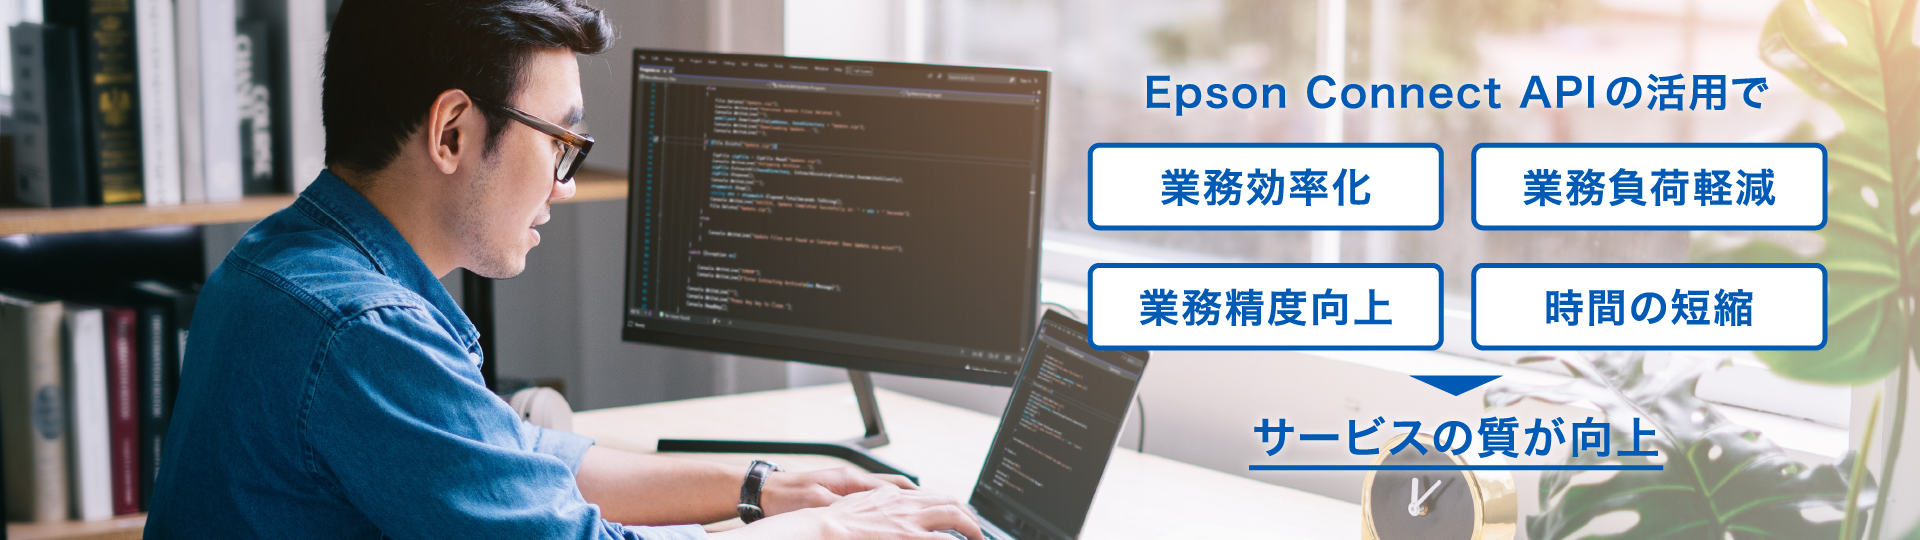 Epson Connect APIの活用で「業務効率化・業務負荷軽減・業務精度向上・時間の短縮」→サービスの質が向上